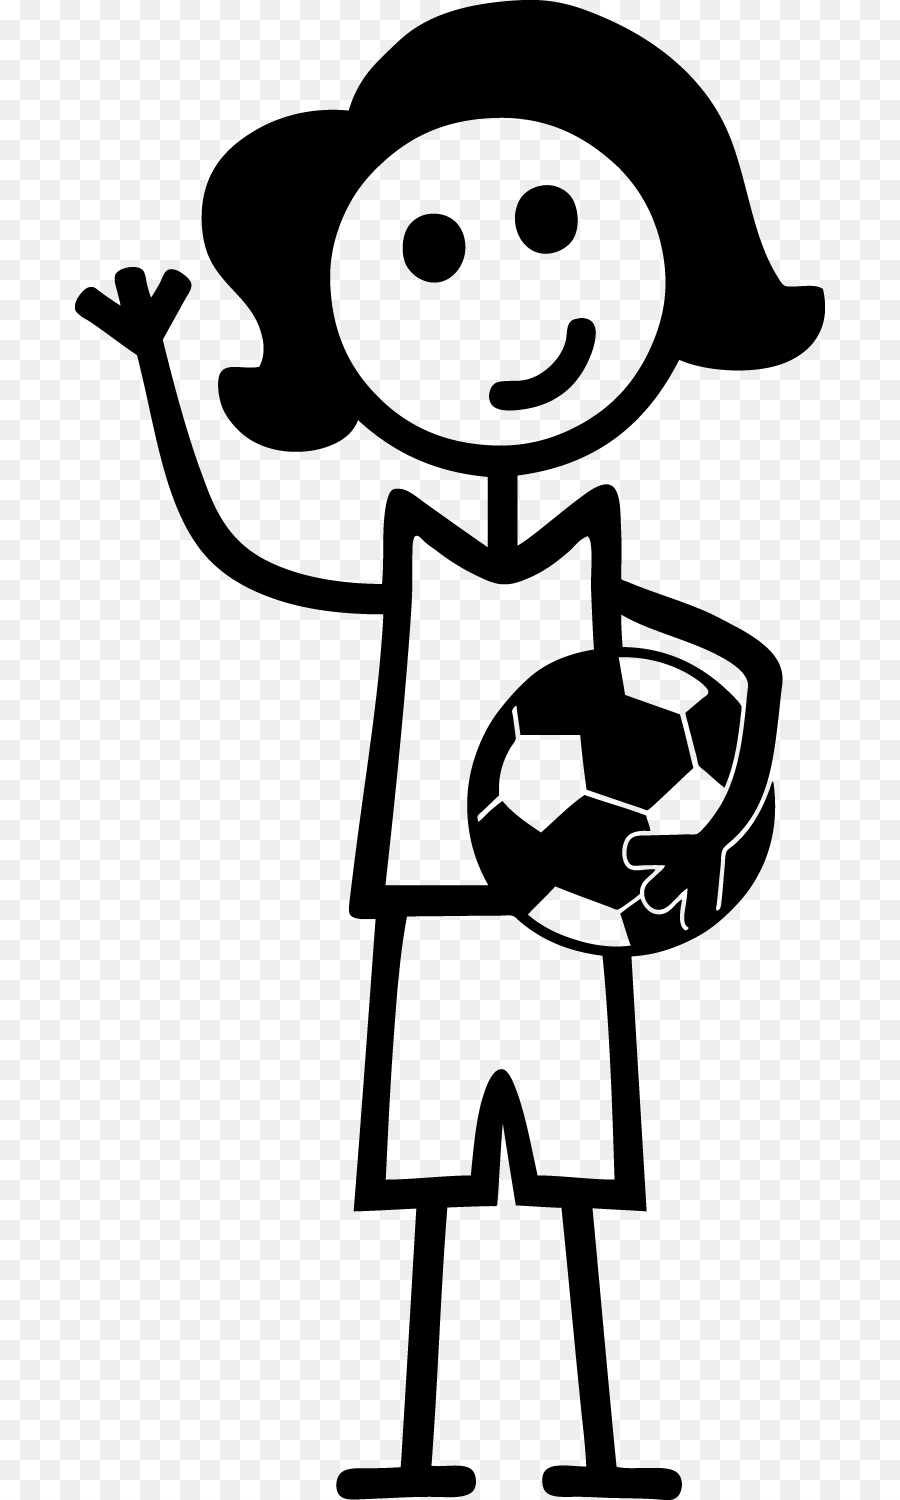 Stick figure Woman Female Clip art - soccer player png download - 750*1500 - Free Transparent Stick Figure png Download.